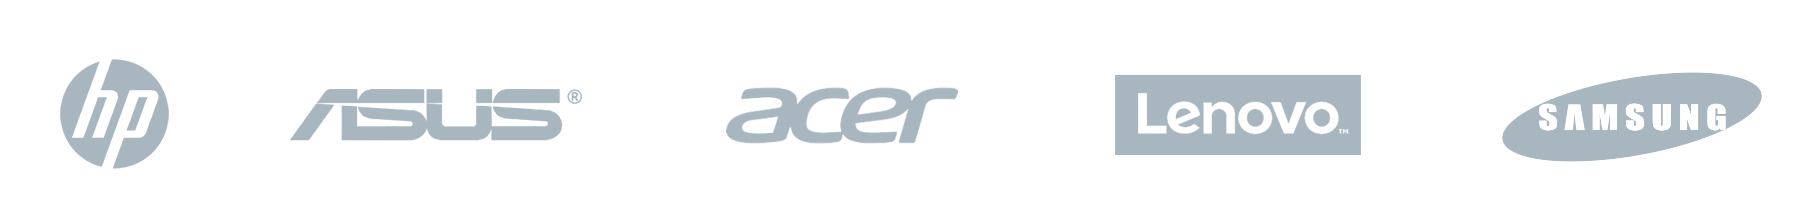 Dimerco's consumer electronics partners' logos